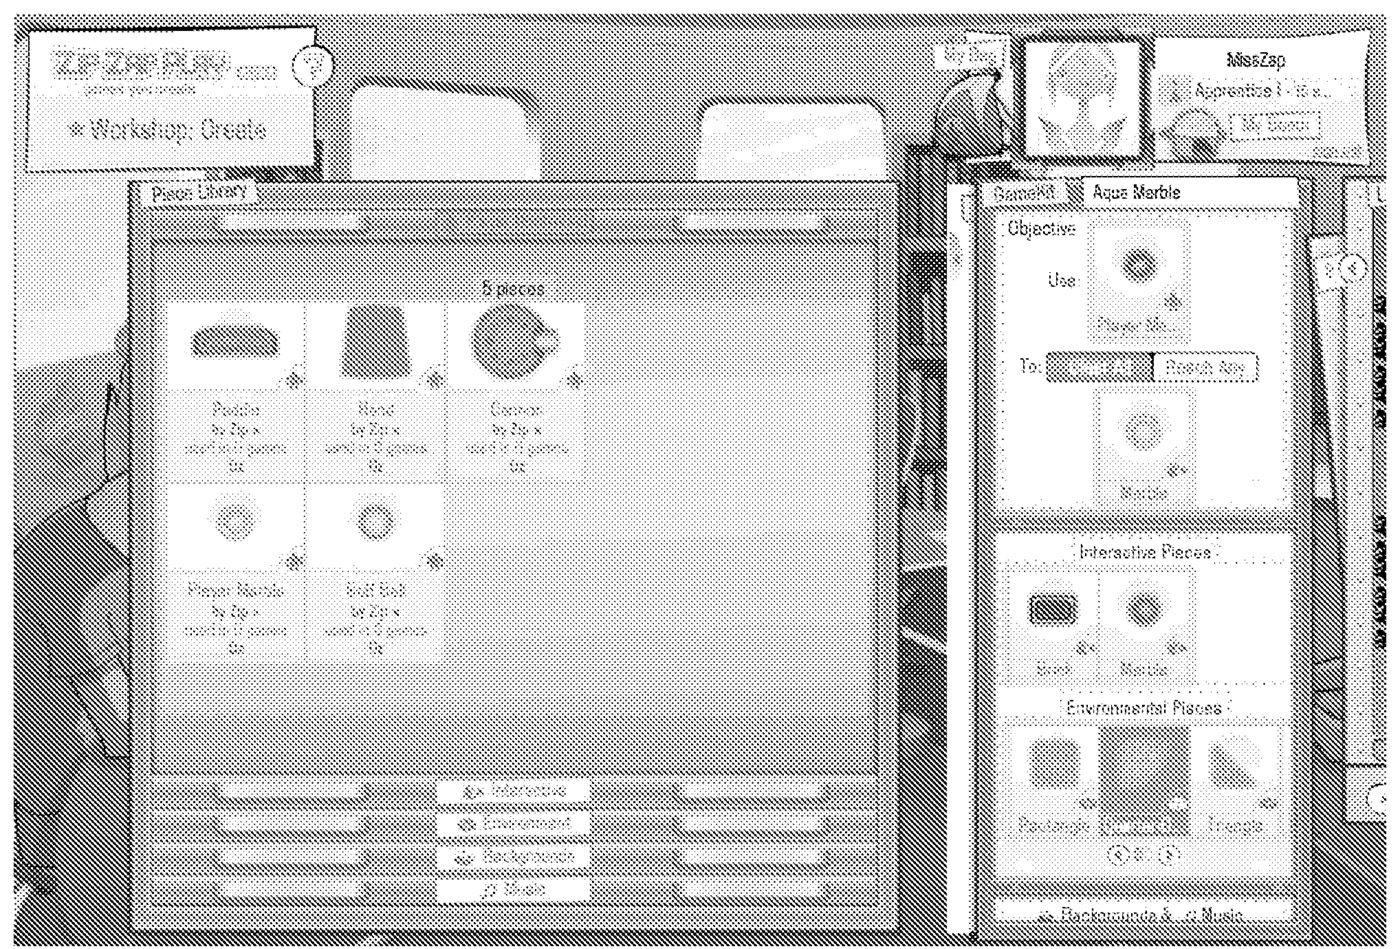 patent electronic arts game dev toolkit